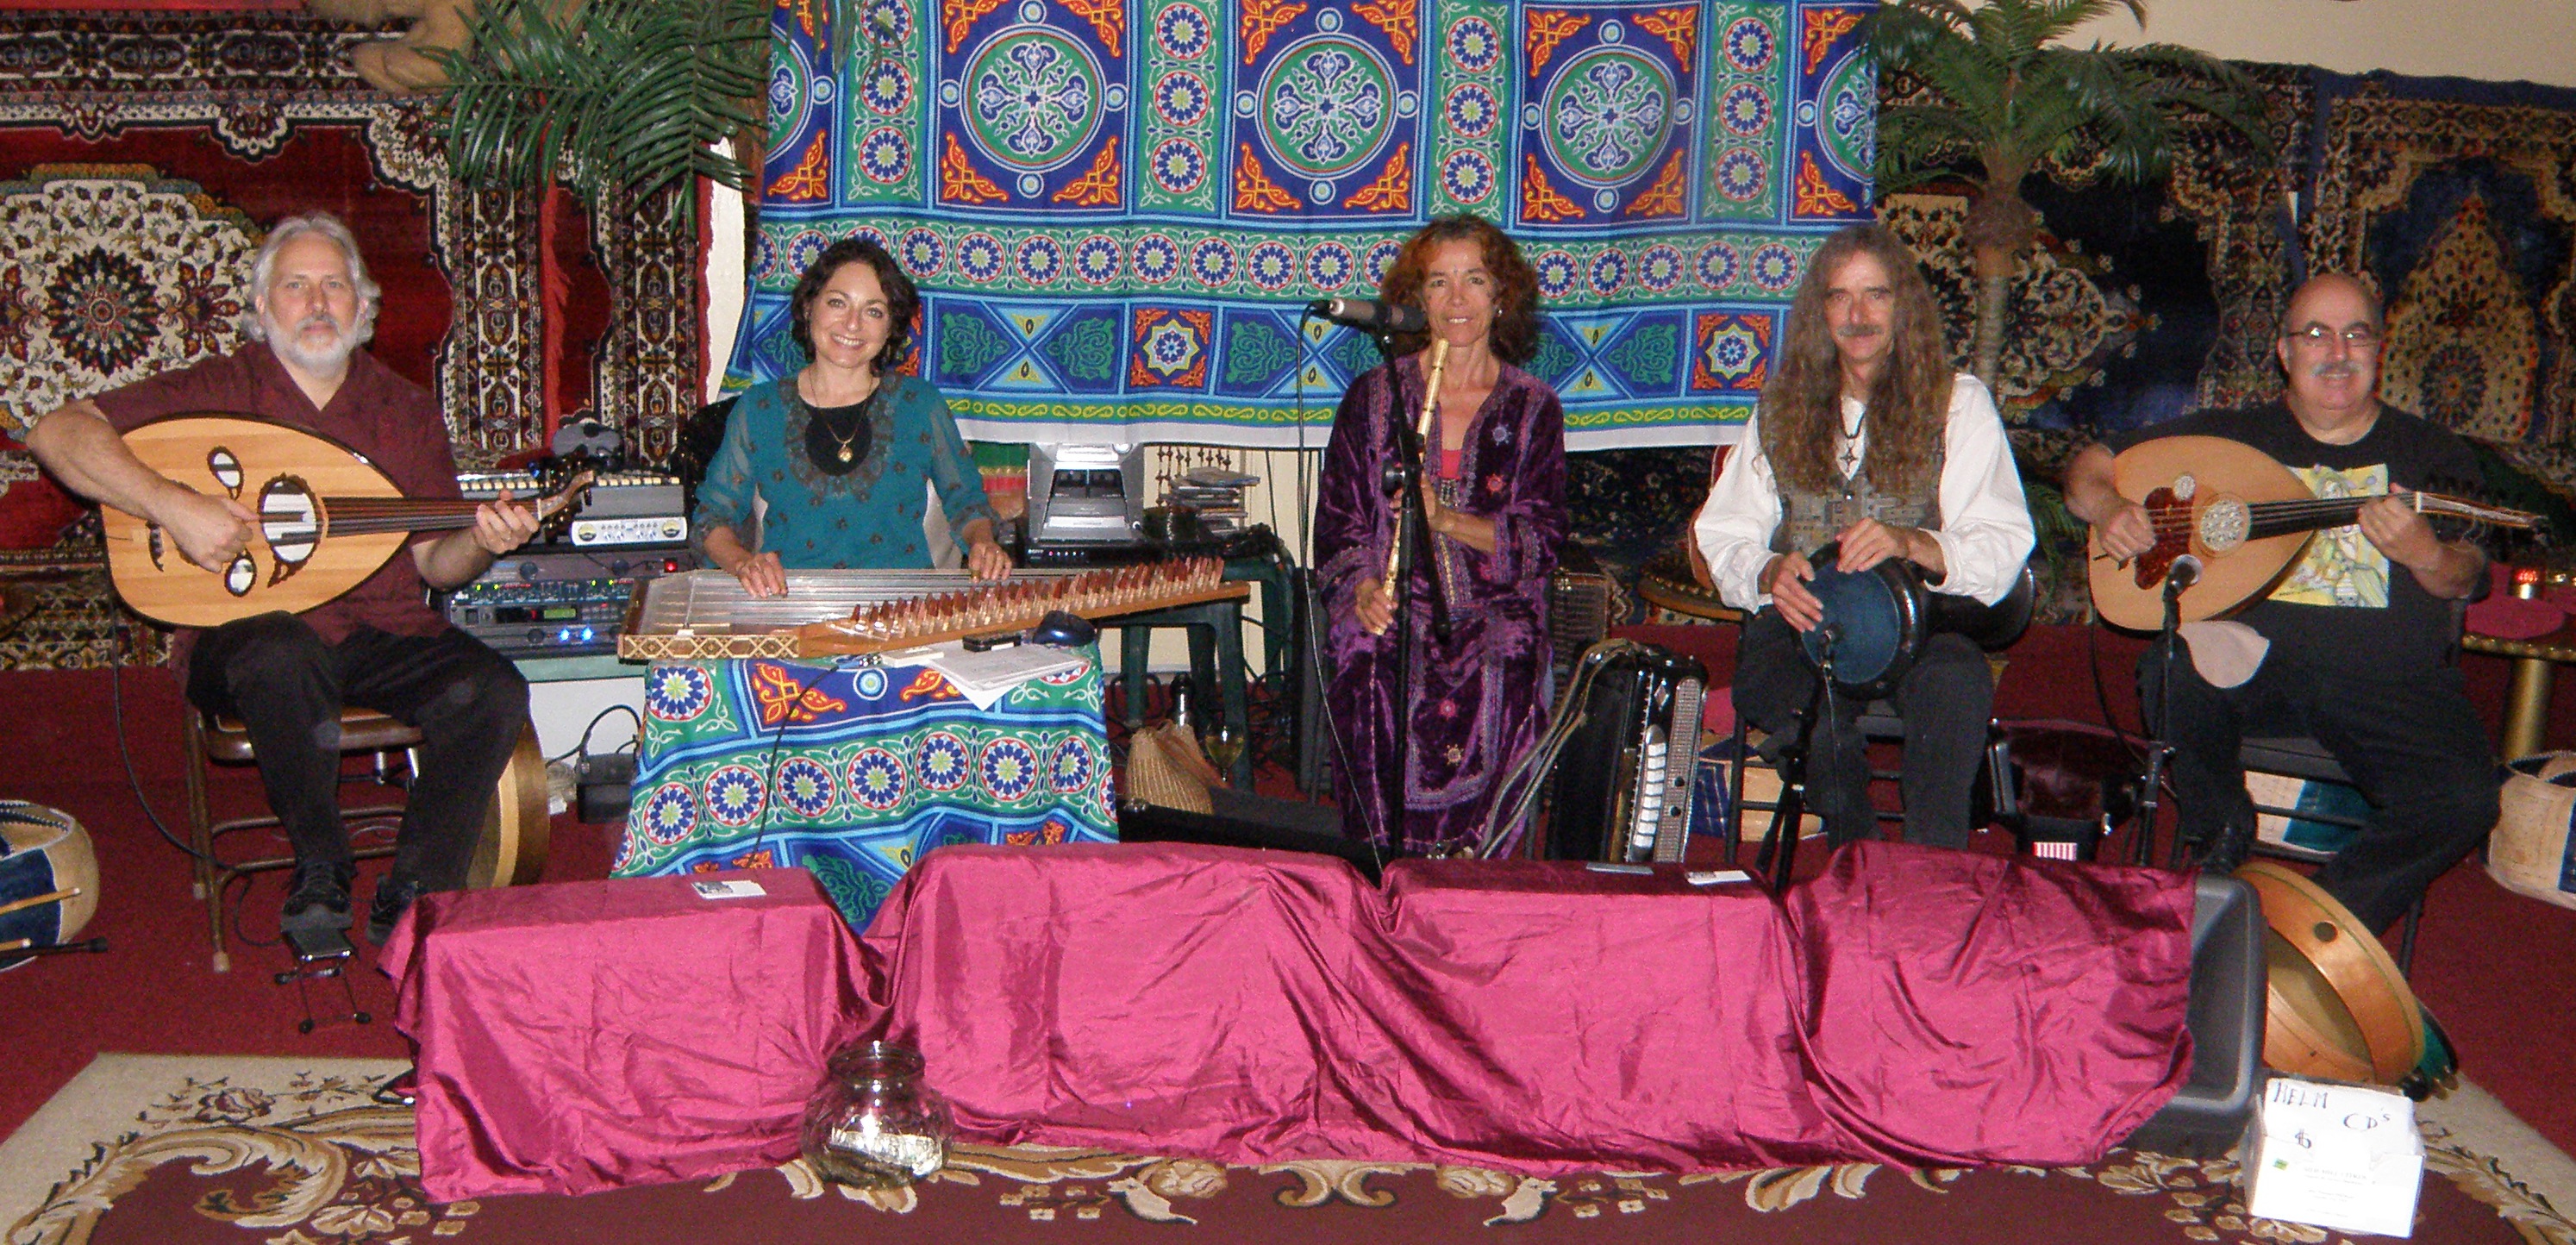 Al 'Azifoon with Helm performing at El Morocco Dancers Night, October 2011.